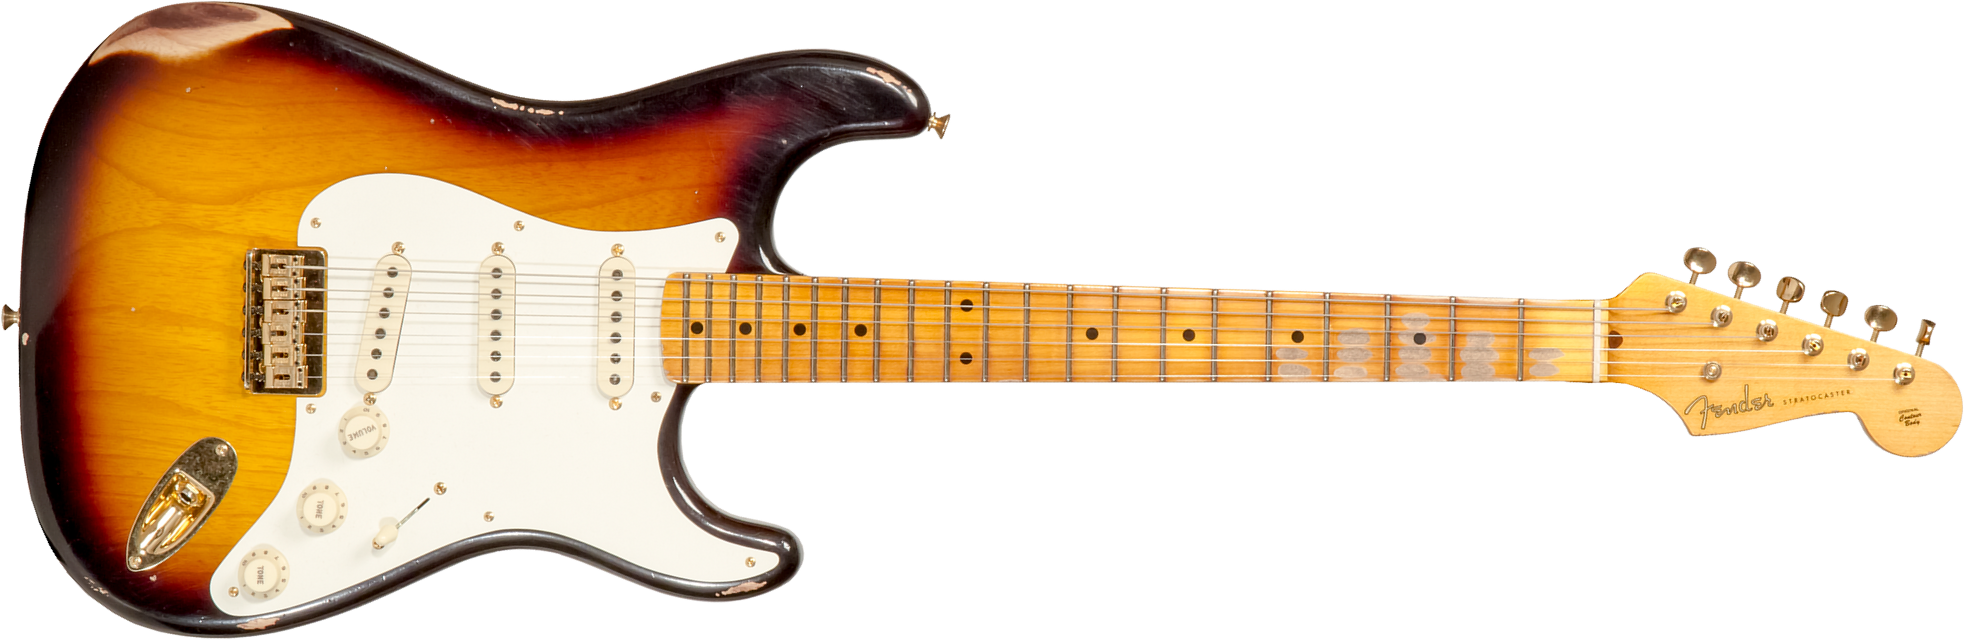 Fender Custom Shop Strat 1956 Hardtail Gold Hardware 3s Ht Mn #cz565119 - Relic Faded 2-color Sunburst - Guitarra eléctrica con forma de str. - Main p